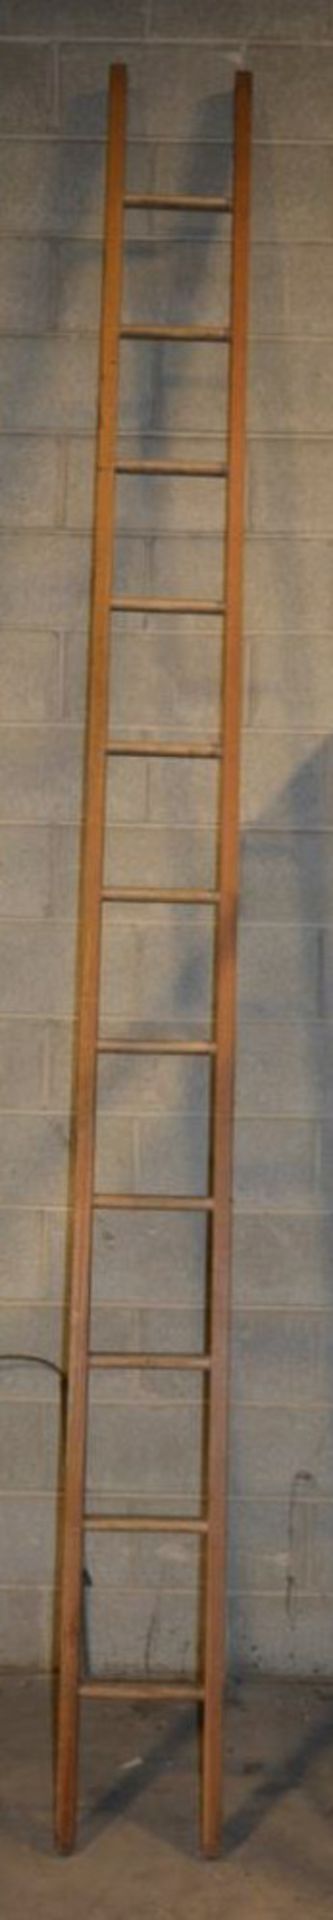 Dayton #153012 12' Wood Straight Ladder